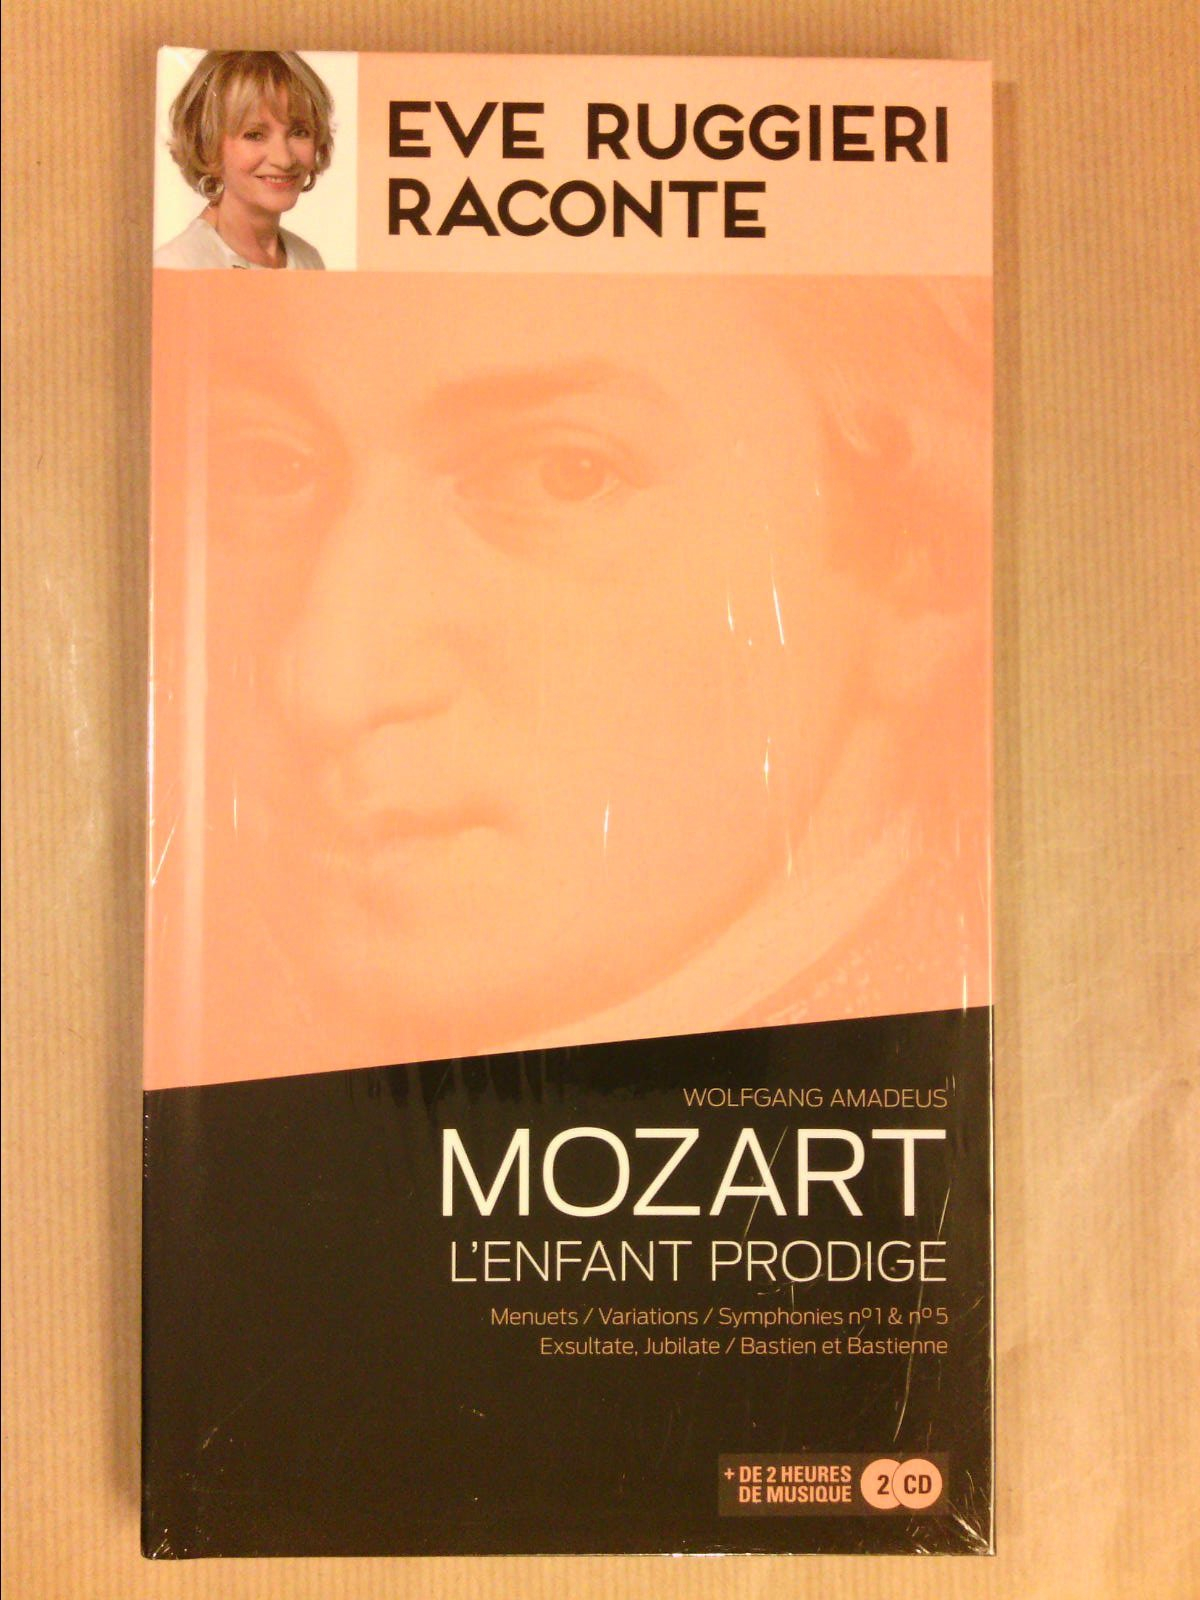 Eve Ruggieri raconte- Mozart l'enfant prodige - 2 CD